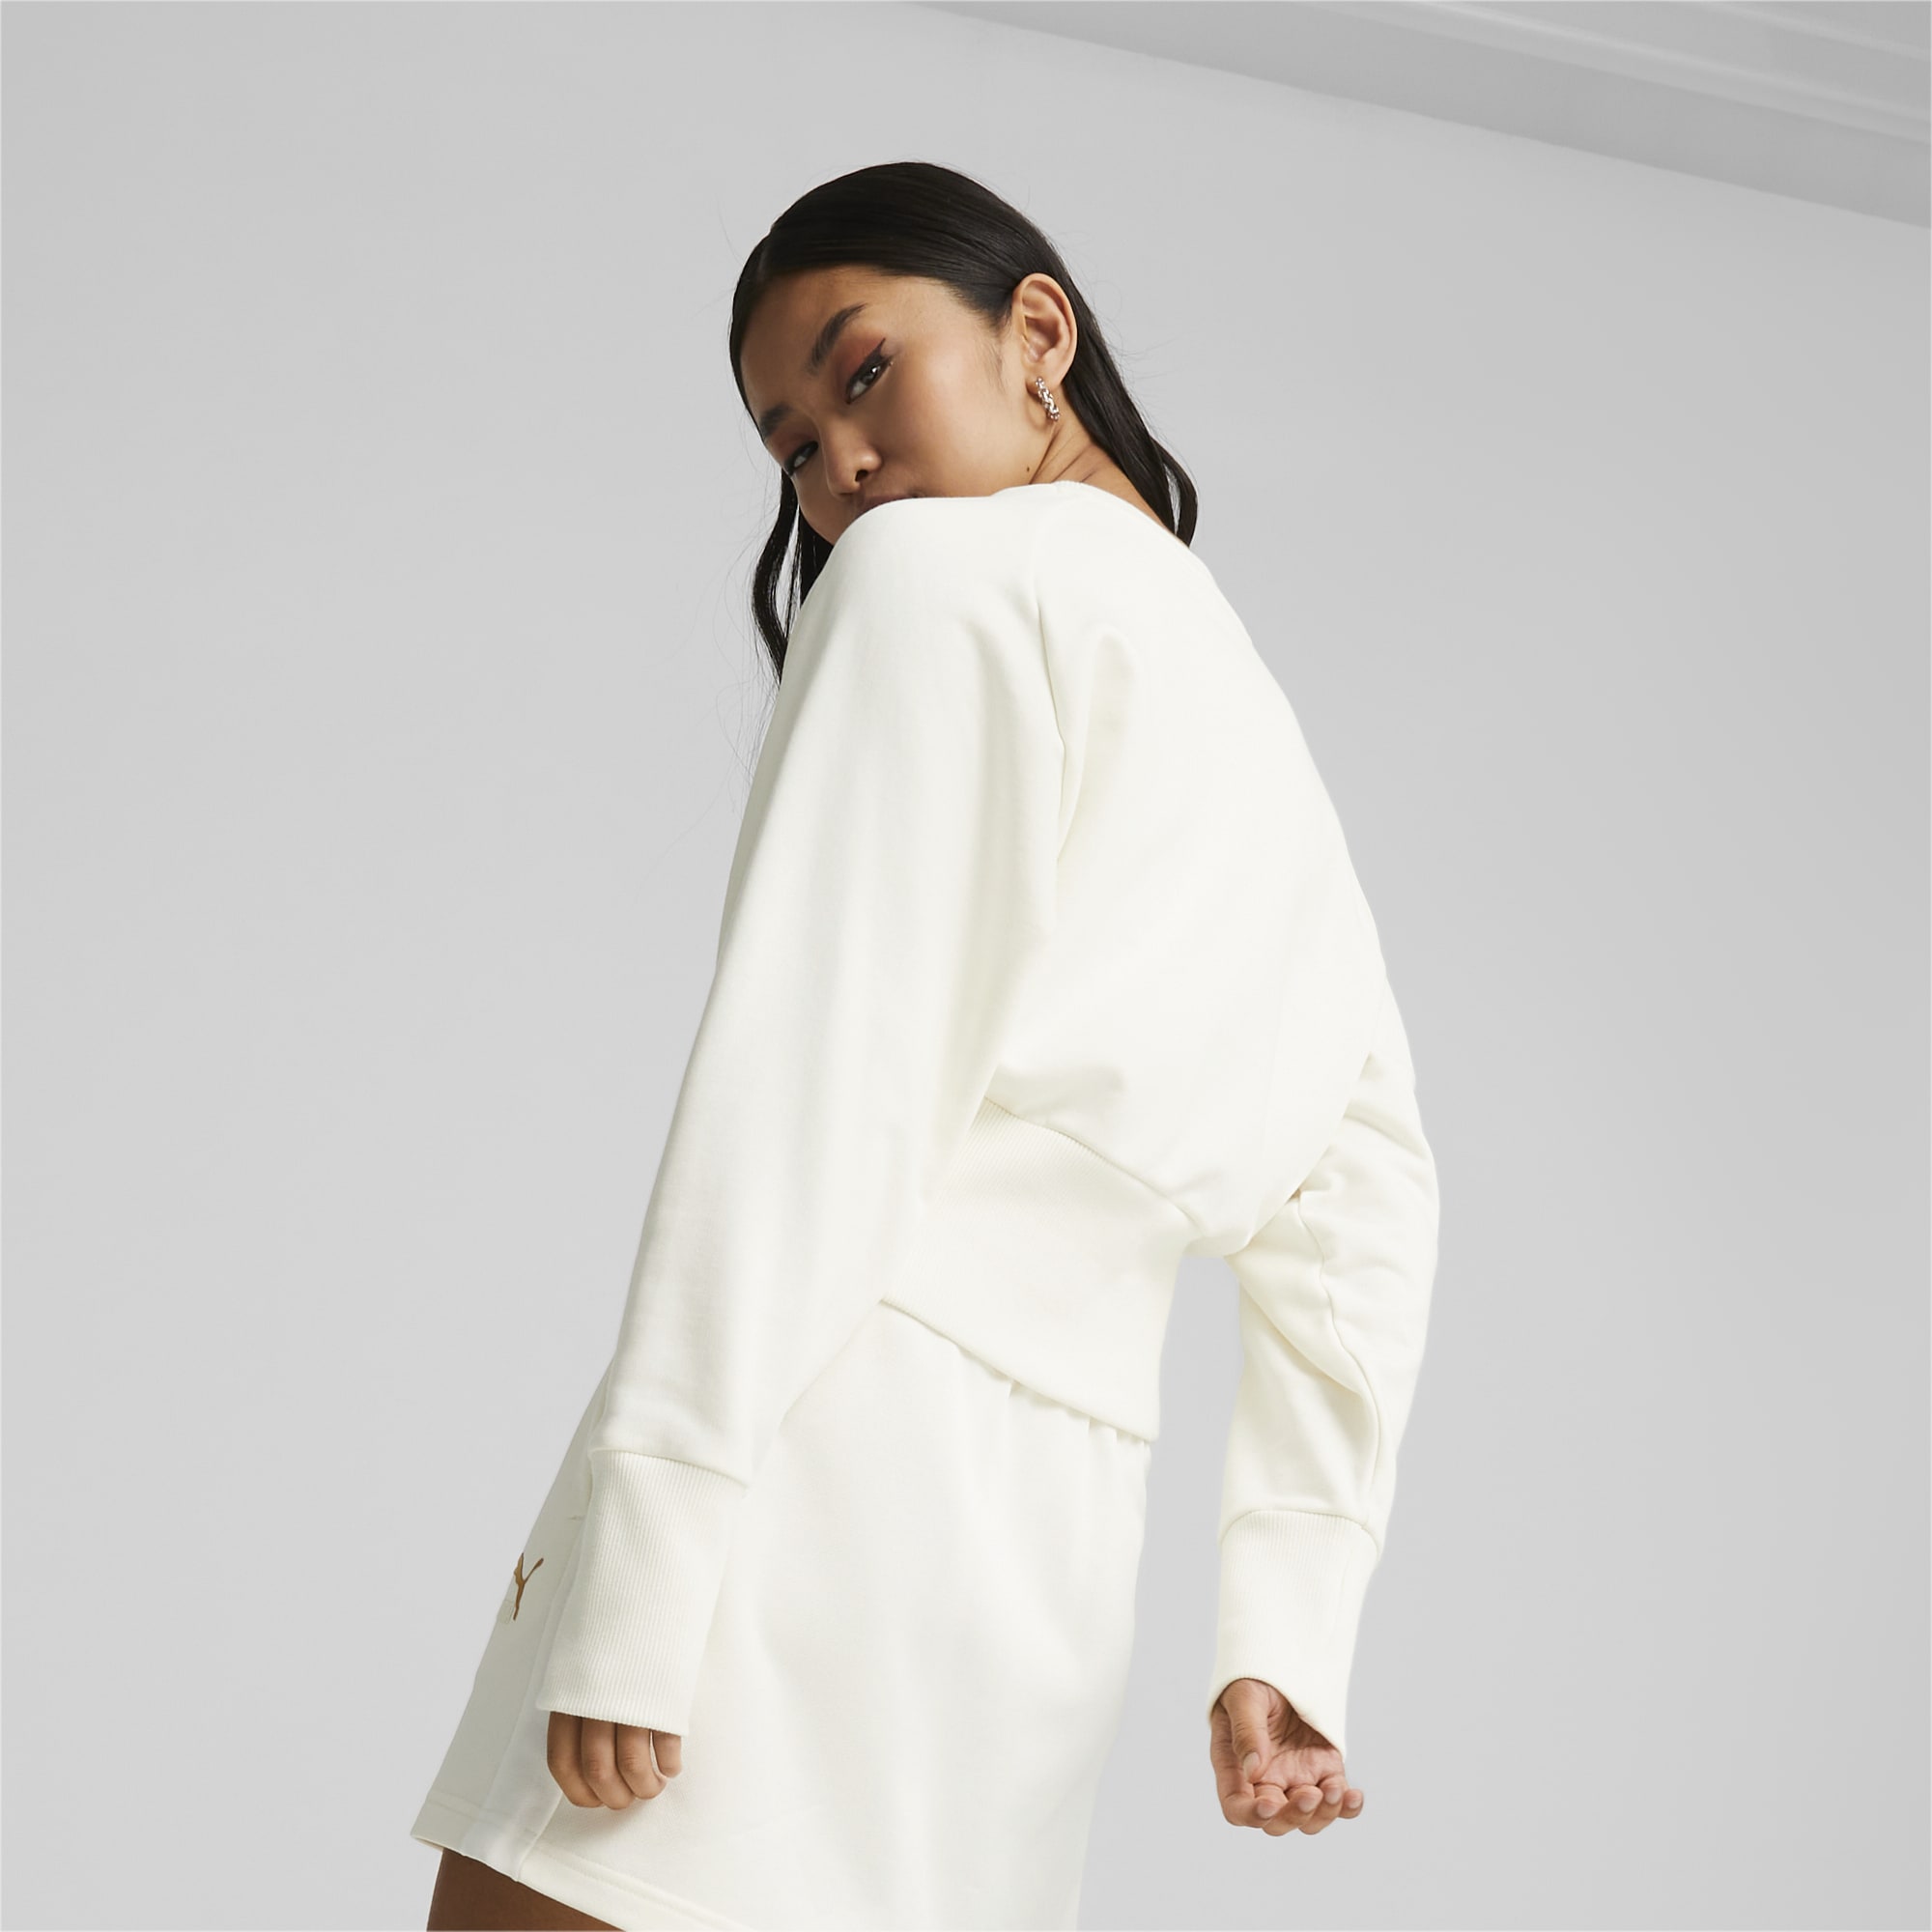 PUMA Classics Women's Sweatshirt, Warm White, Size XS, Clothing